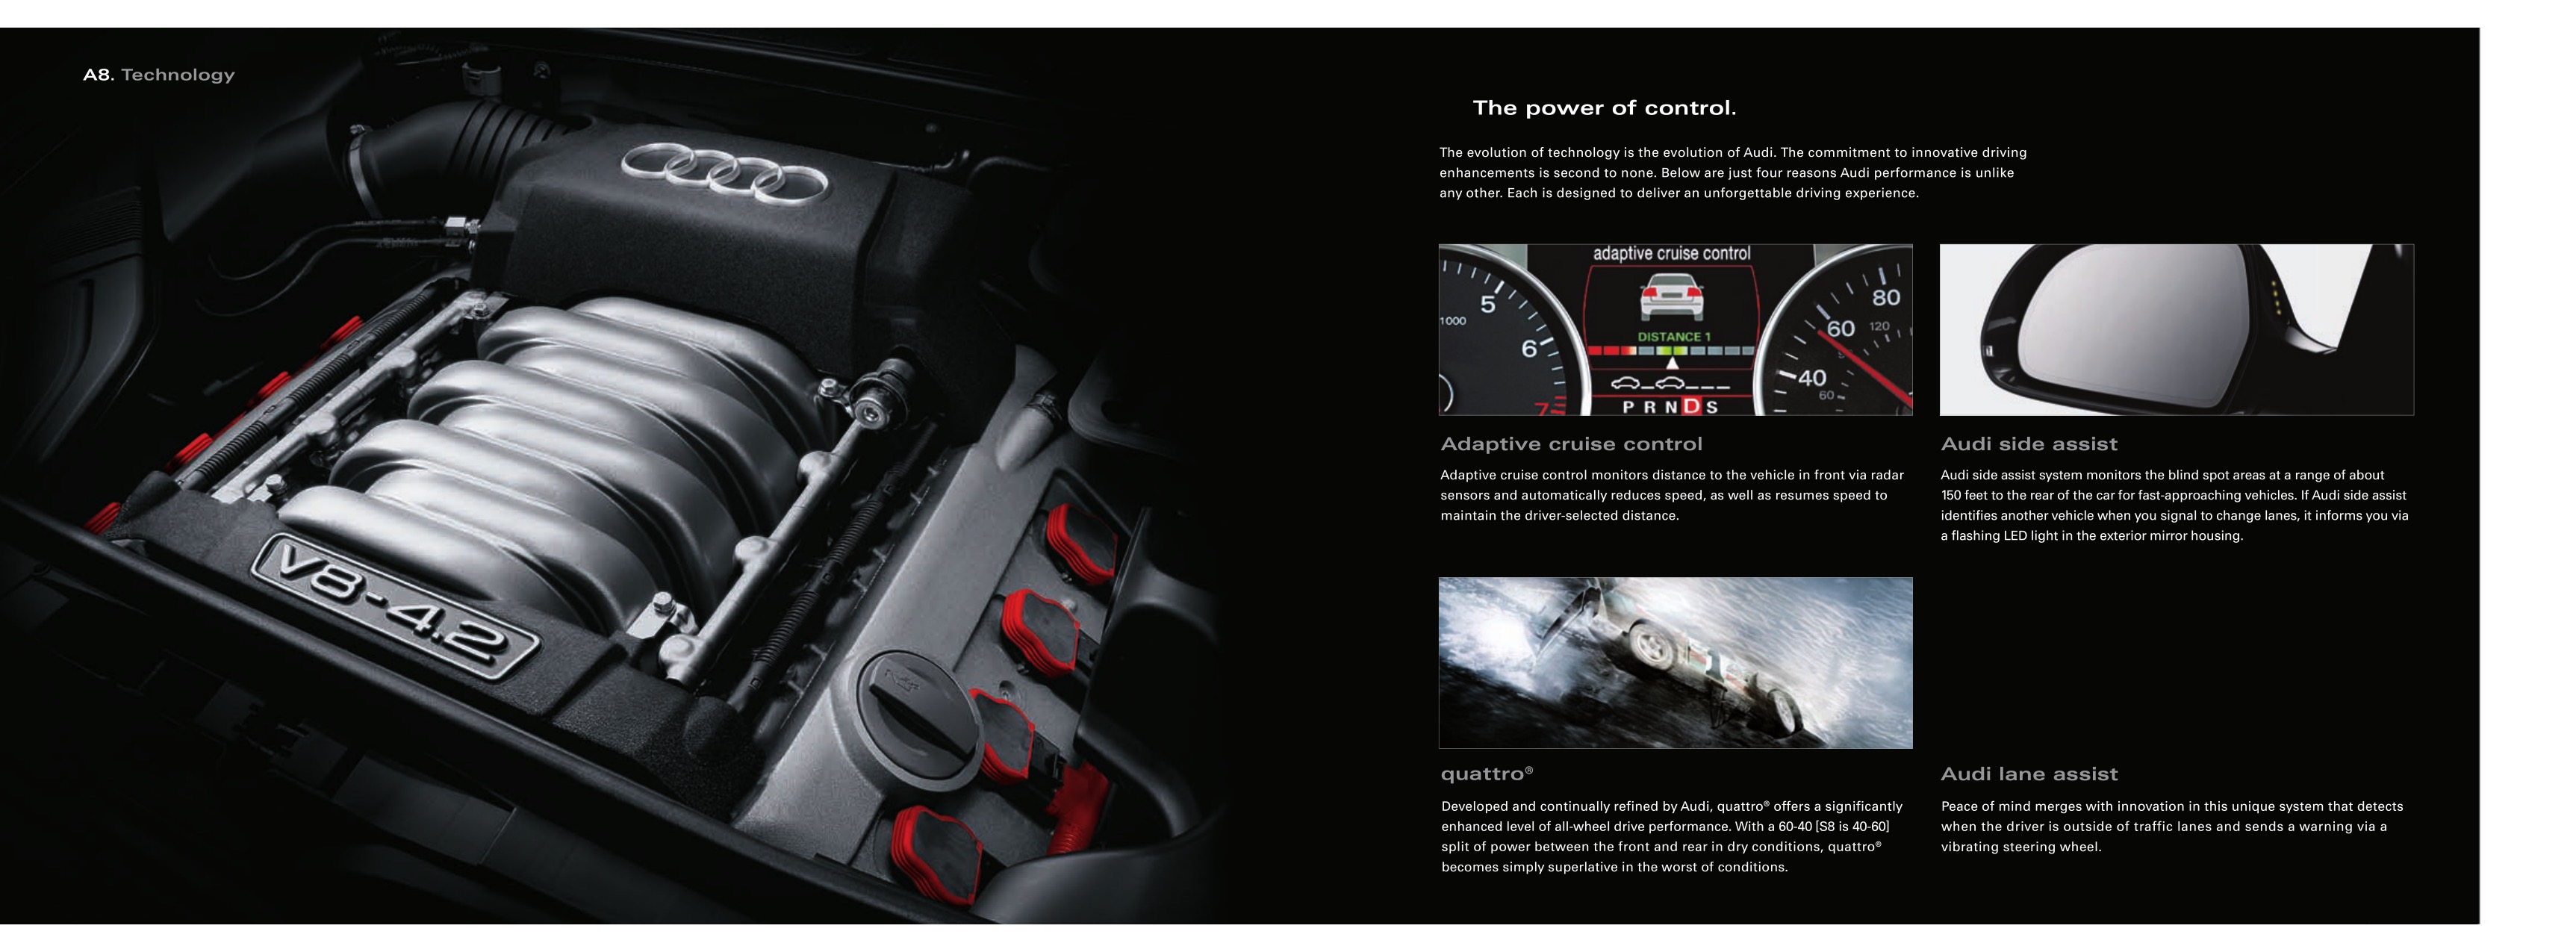 2009 Audi A8 Brochure Page 10